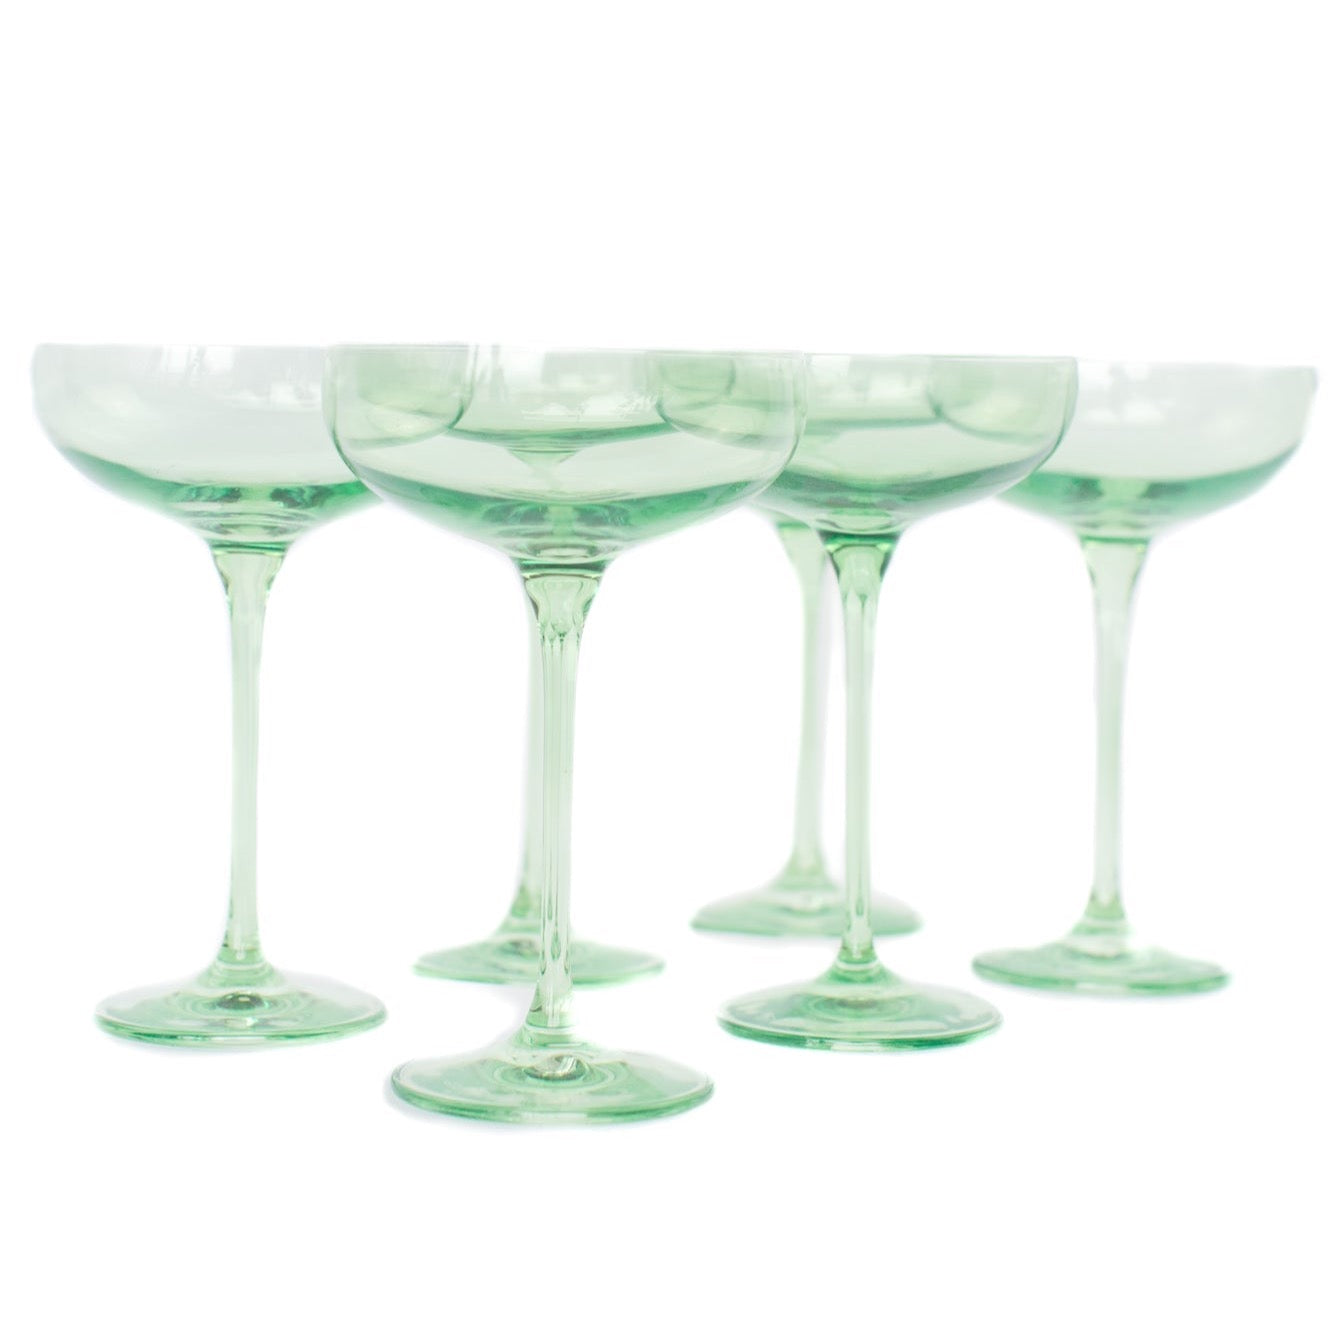 Estelle Champagne Coupe Glasses - Set of 6 - Mint